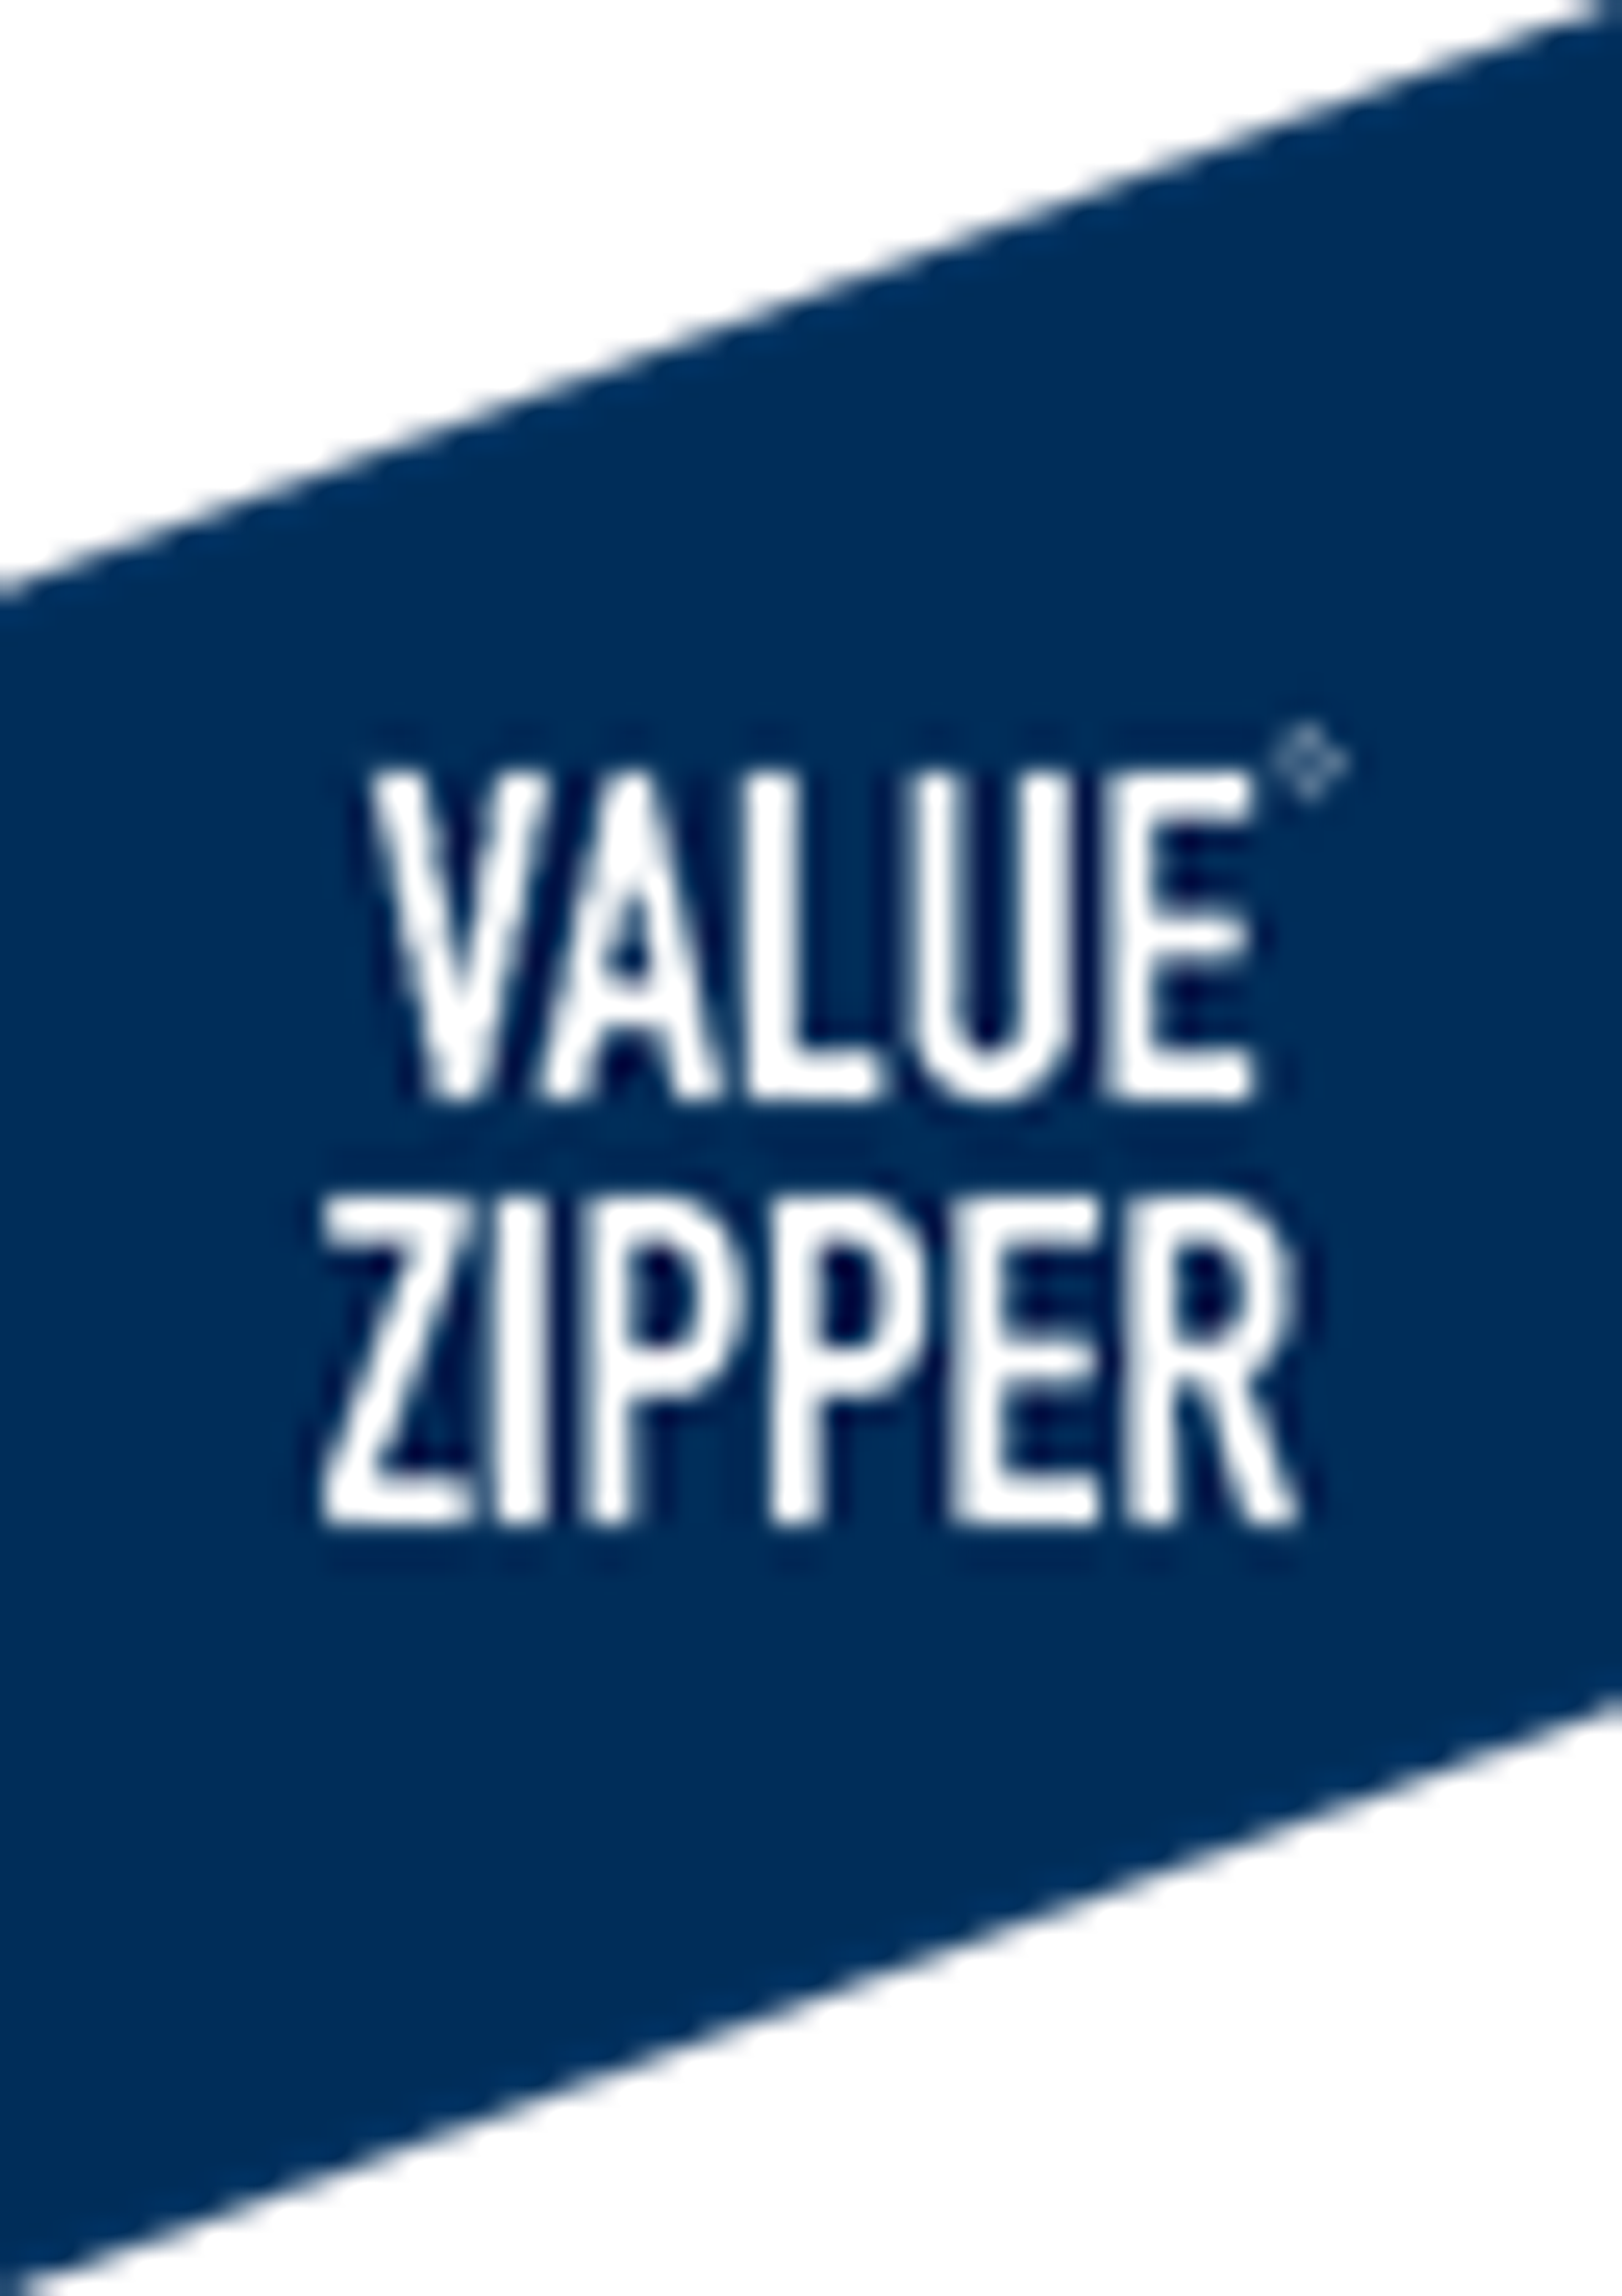 Value Zipper in OOH